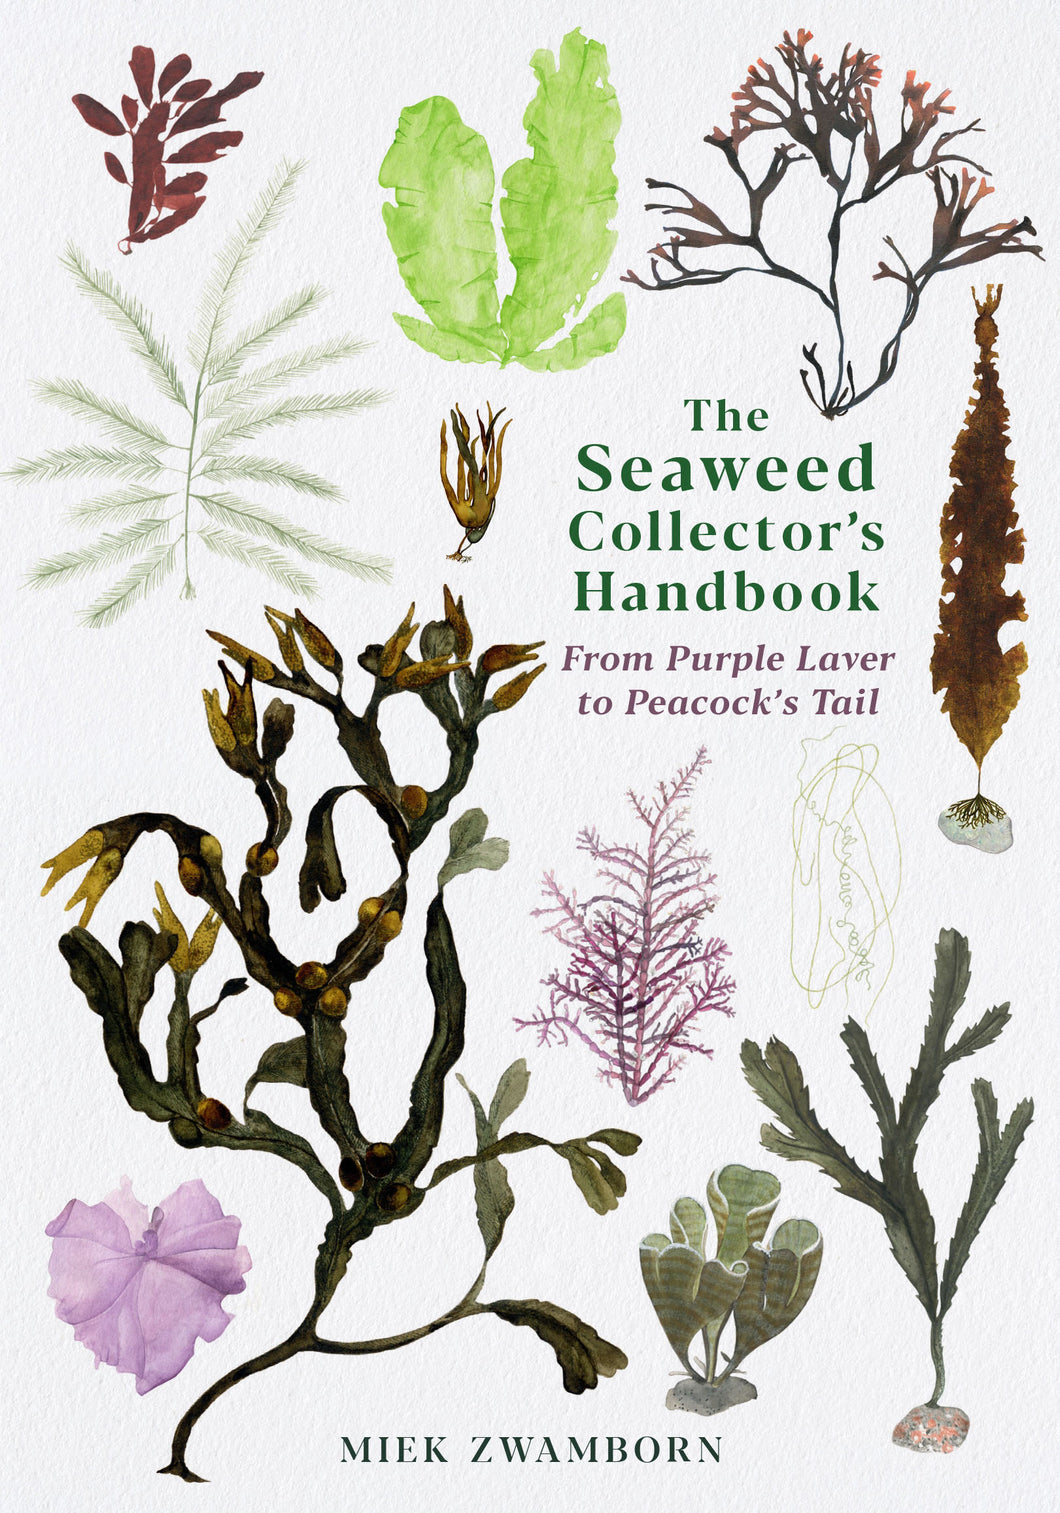 The Seaweed Collector's Handbook by Miek Zwamborn